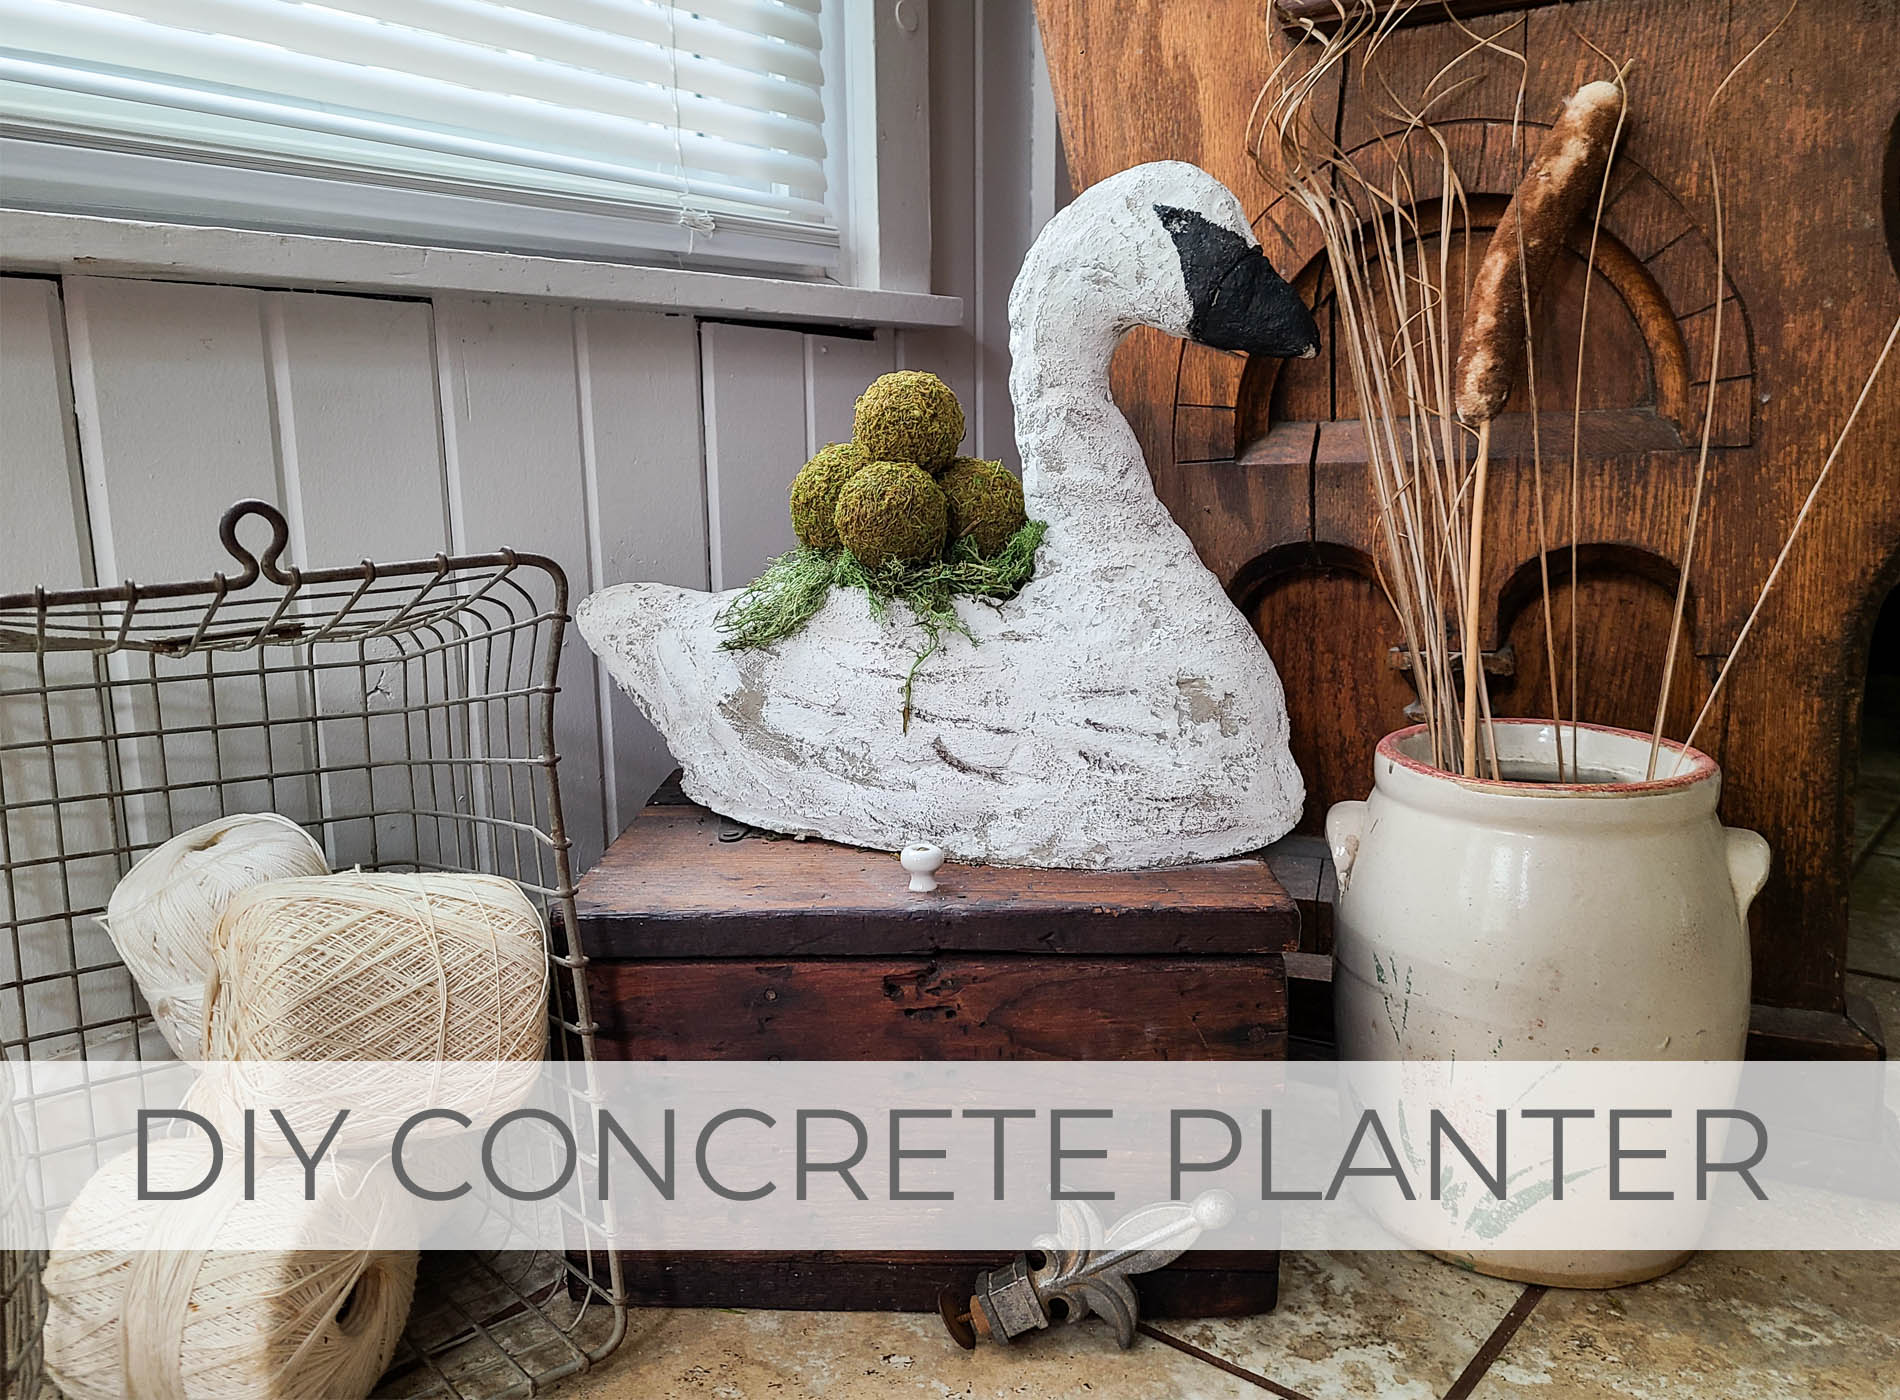 DIY Concrete Planter Tutorial by Larissa of Prodigal Pieces | prodigalpieces.com #prodigalpieces